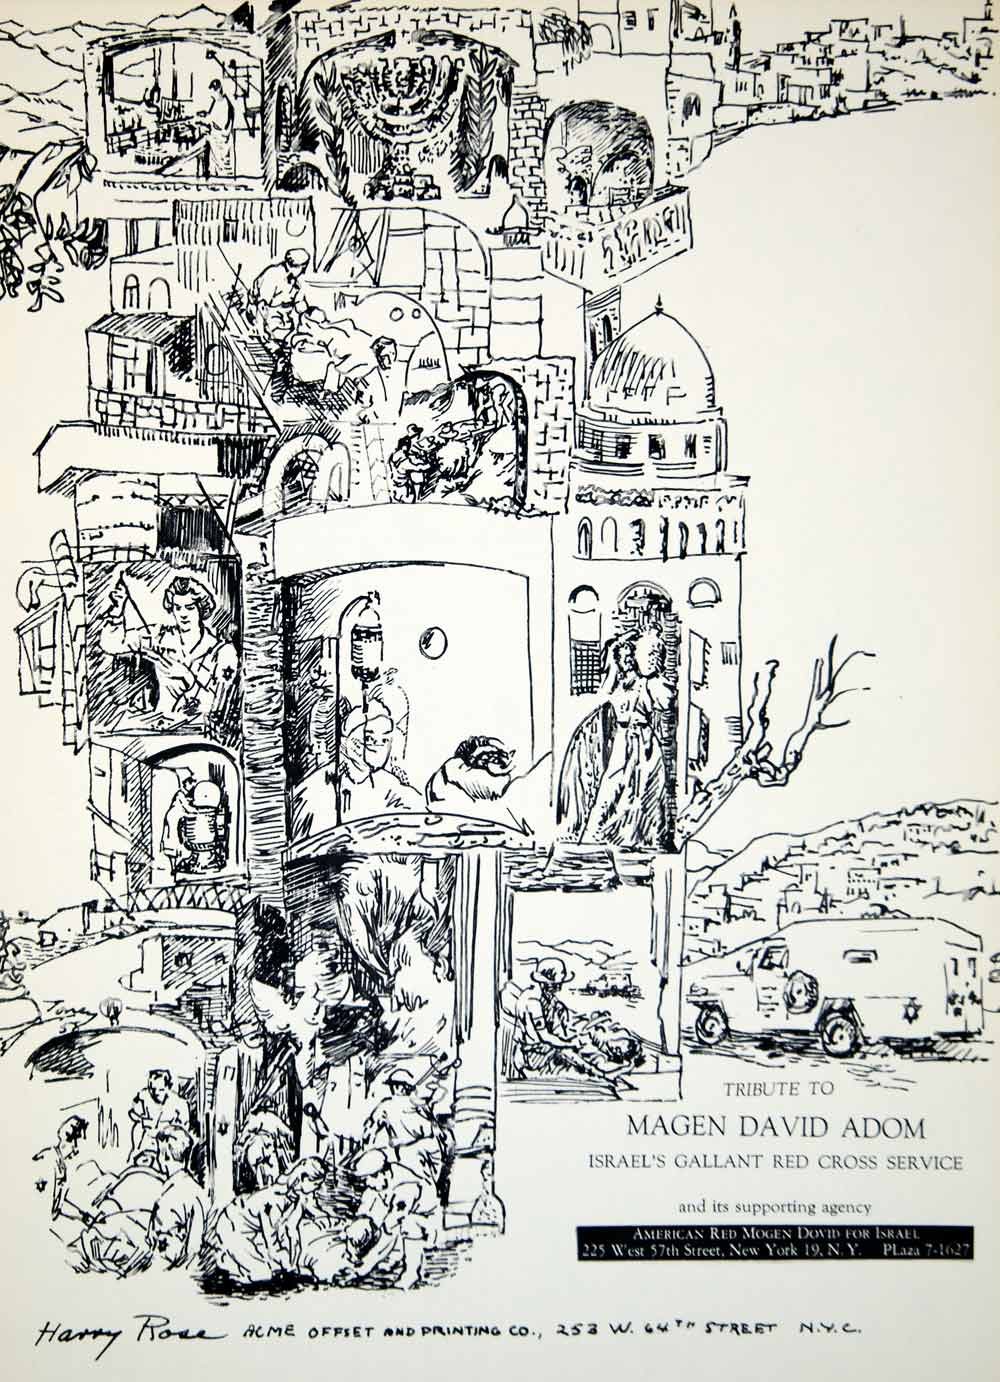 1958 Lithograph Harry Rose Art Magen David Adom Israel Red Cross Service MDA